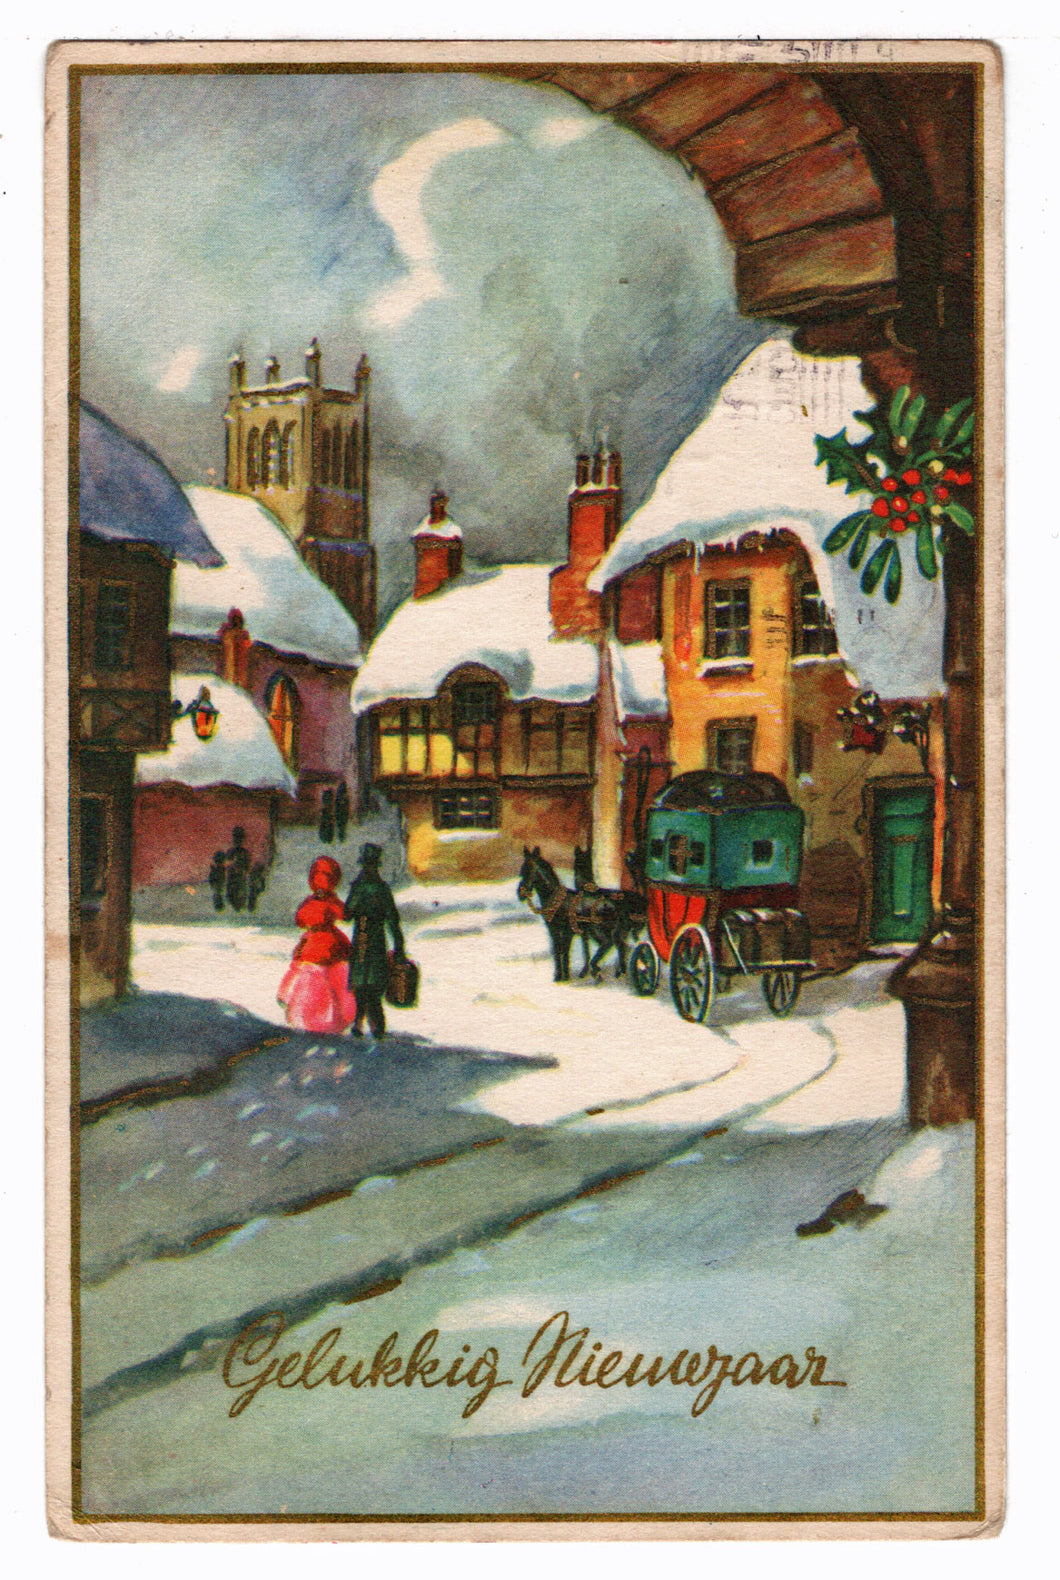 Happy New Year - Gelukkig Nieuwjaar Vintage Original Postcard # 0583 - Post Marked January 31, 1955